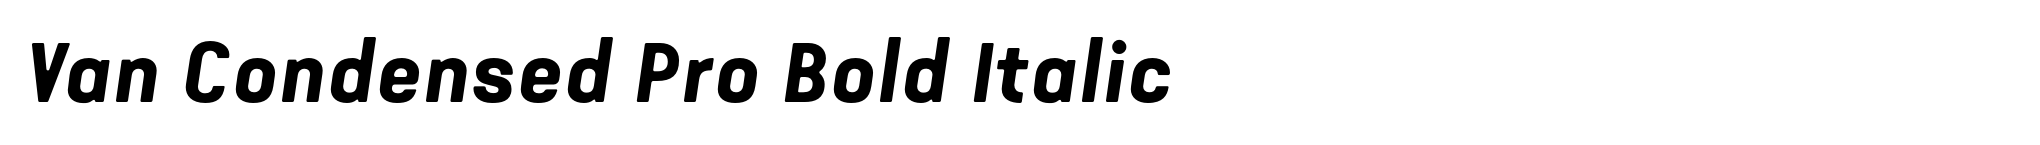 Van Condensed Pro Bold Italic image